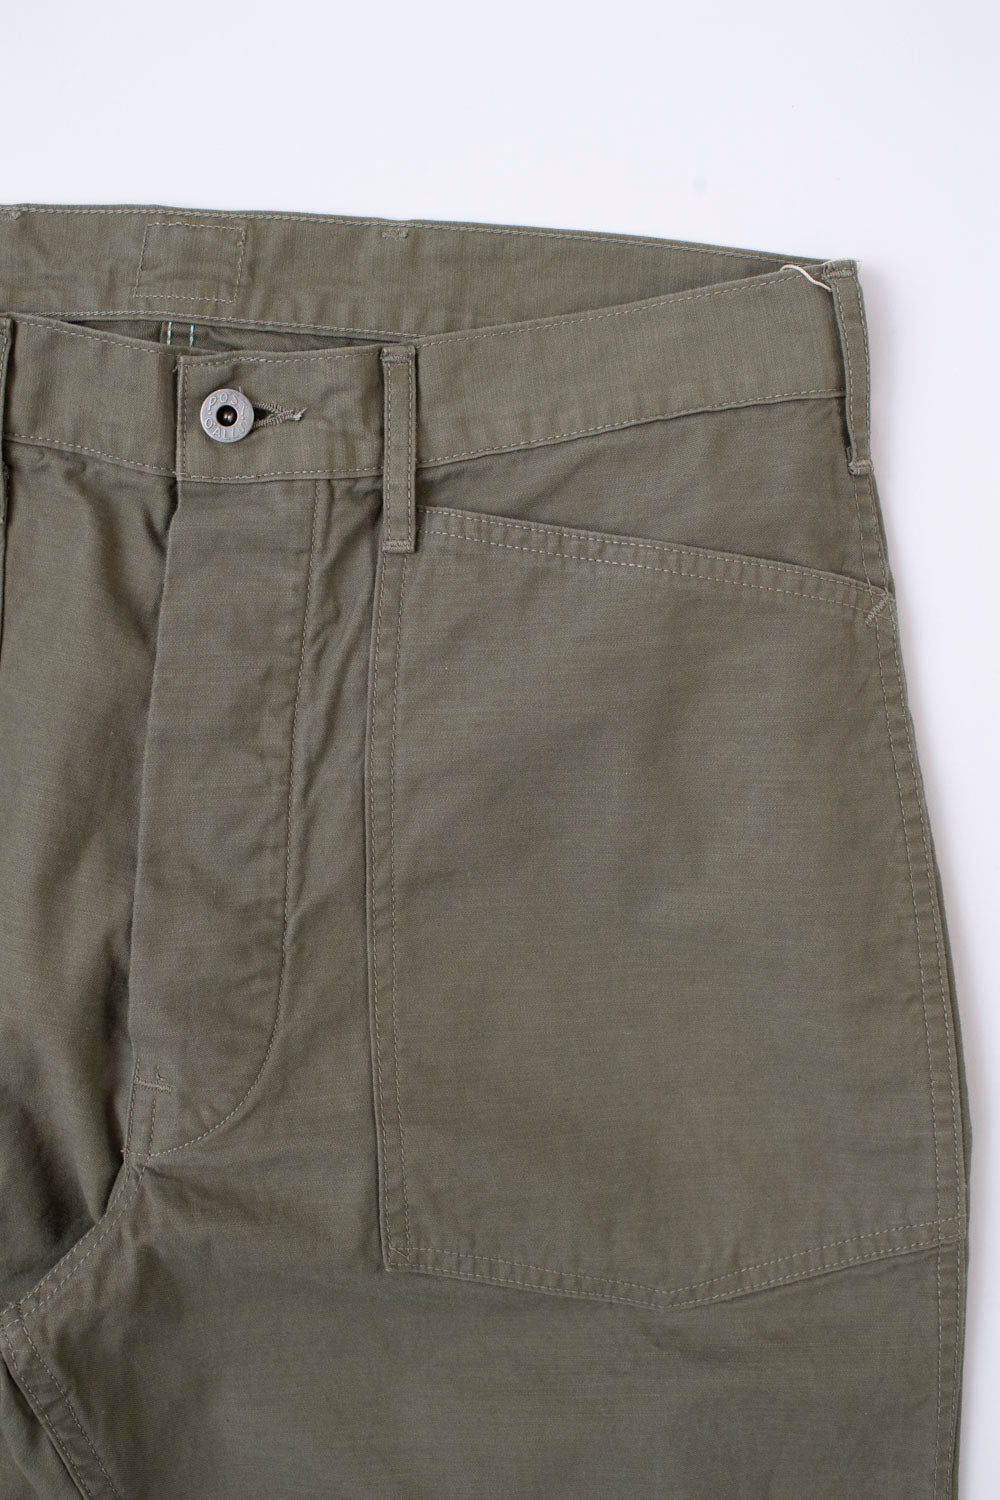 1301-VMO - Army Pants Vintage Sateen - Olive